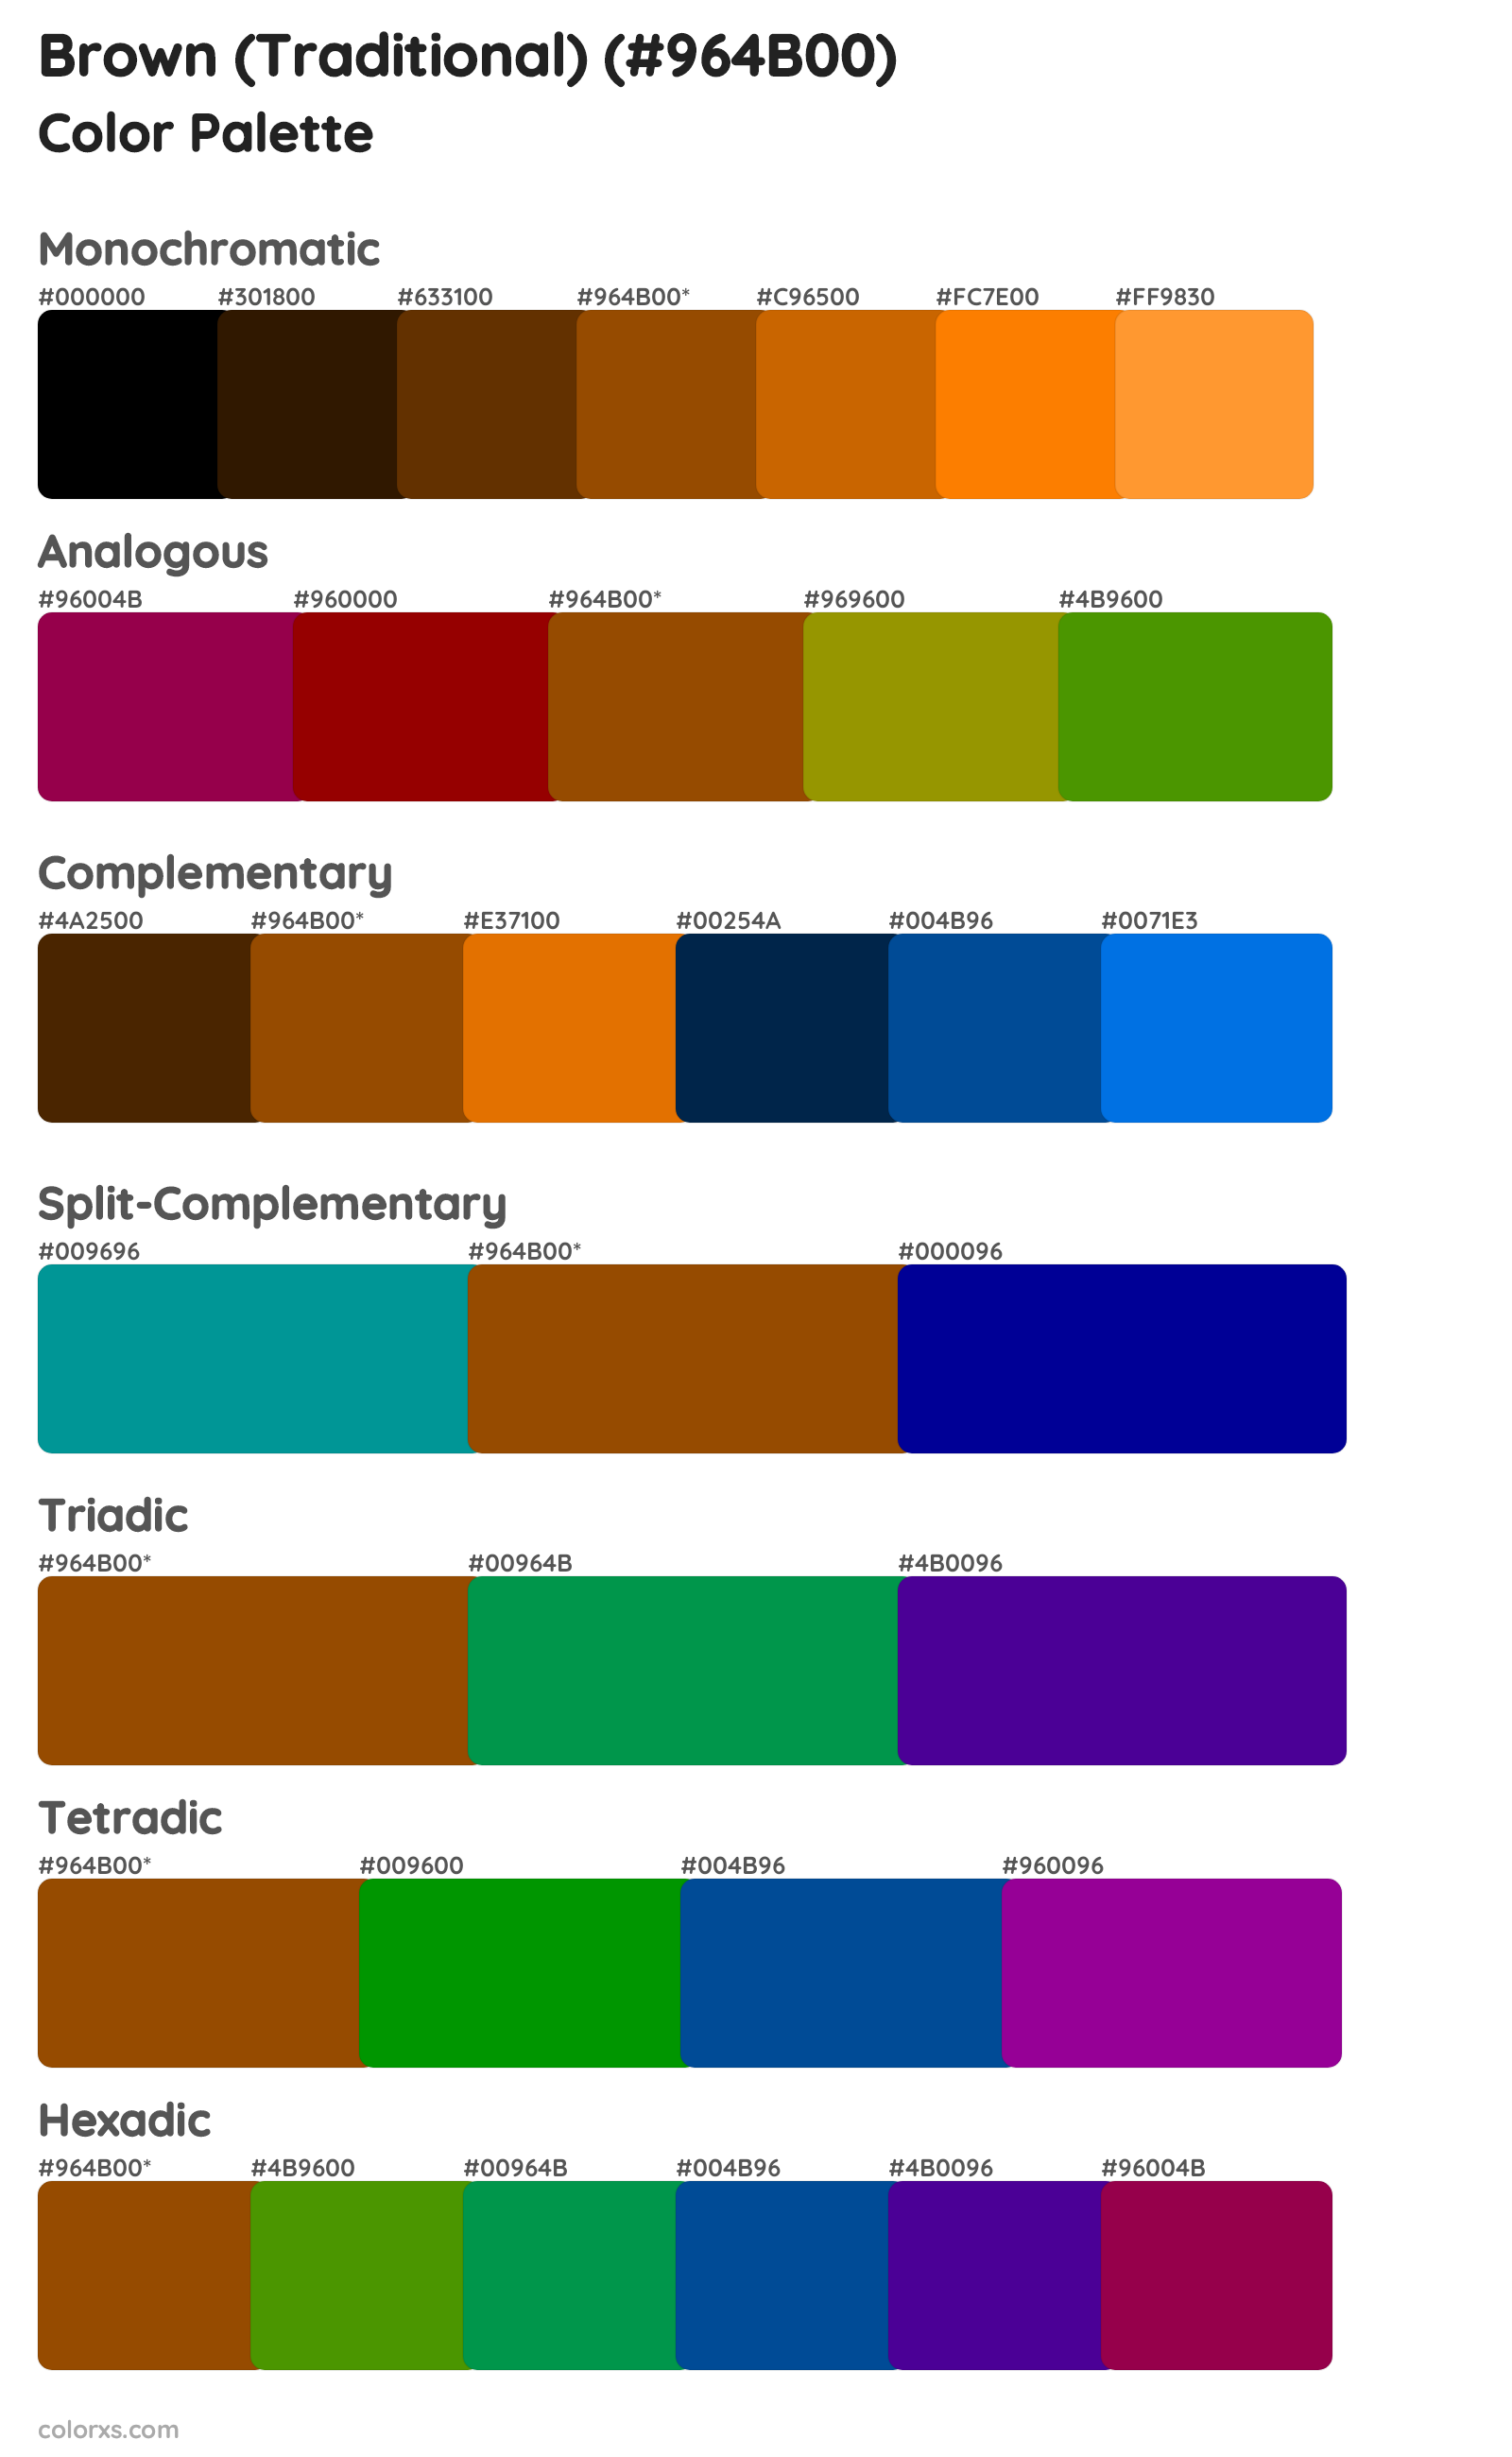 Brown (Traditional) Color Scheme Palettes